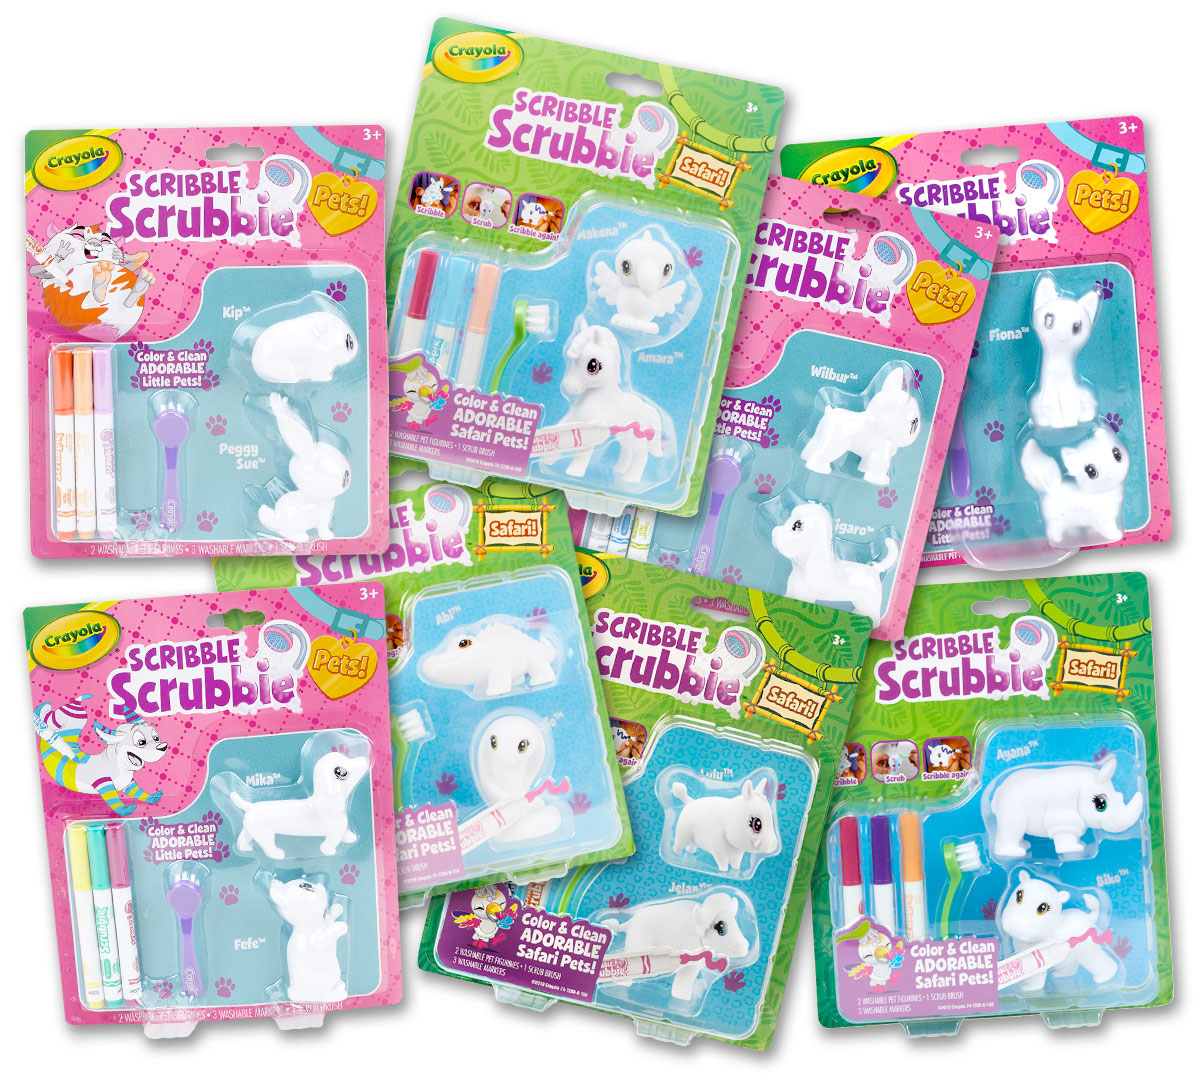 Scribble Scrubbie Animals 8-in-1 Gift Set | Crayola.com | Crayola